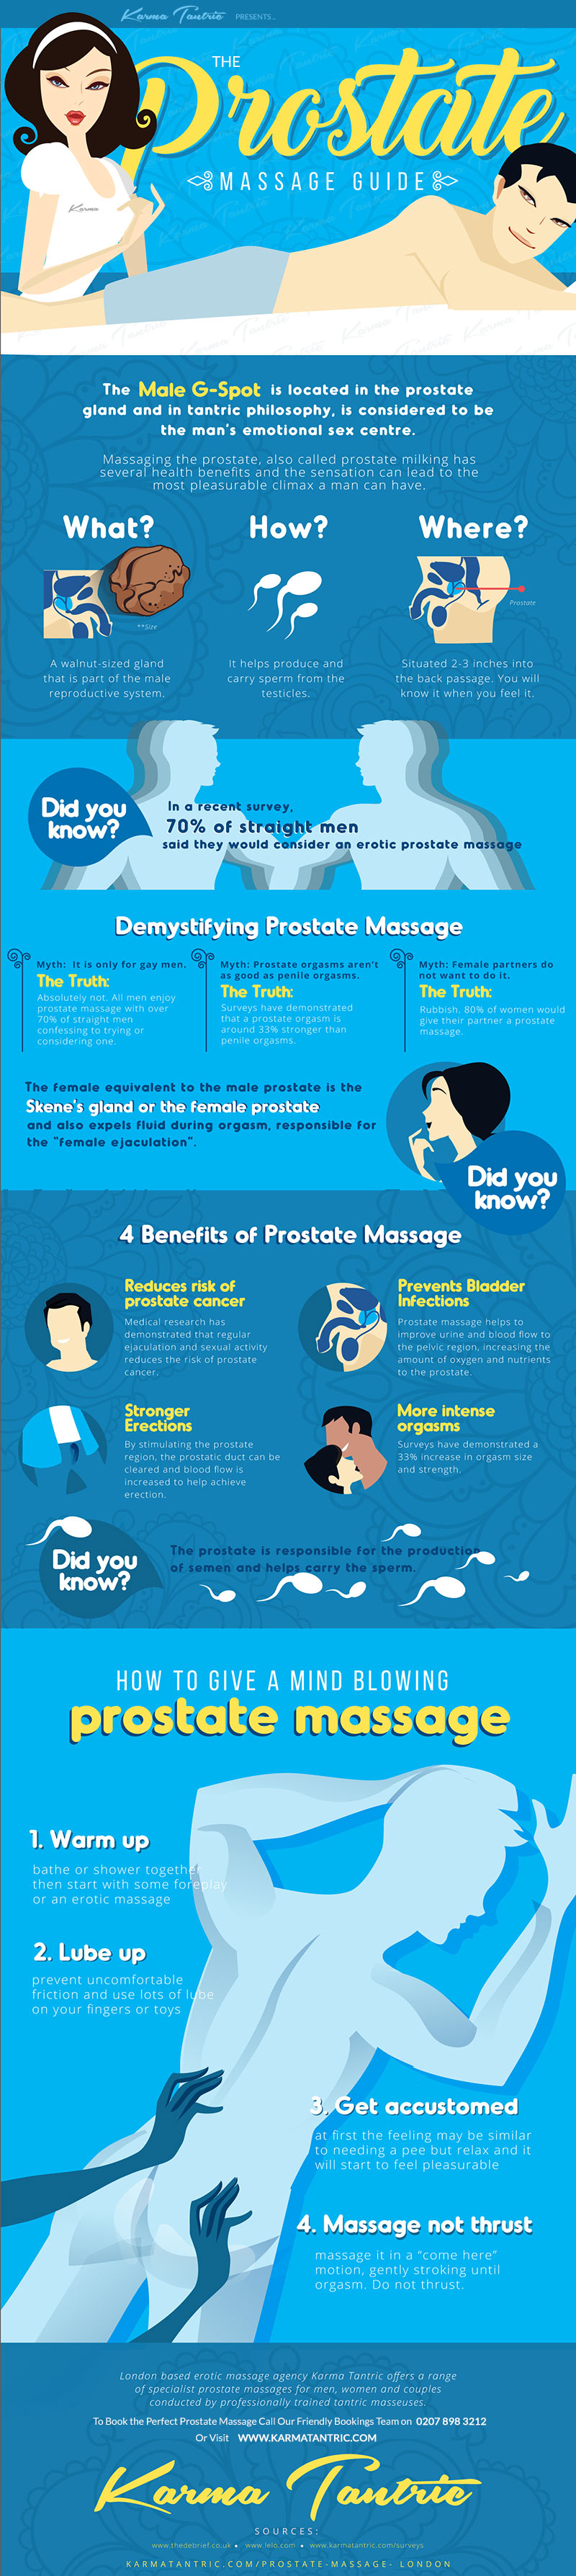 Prostate Massage Guide